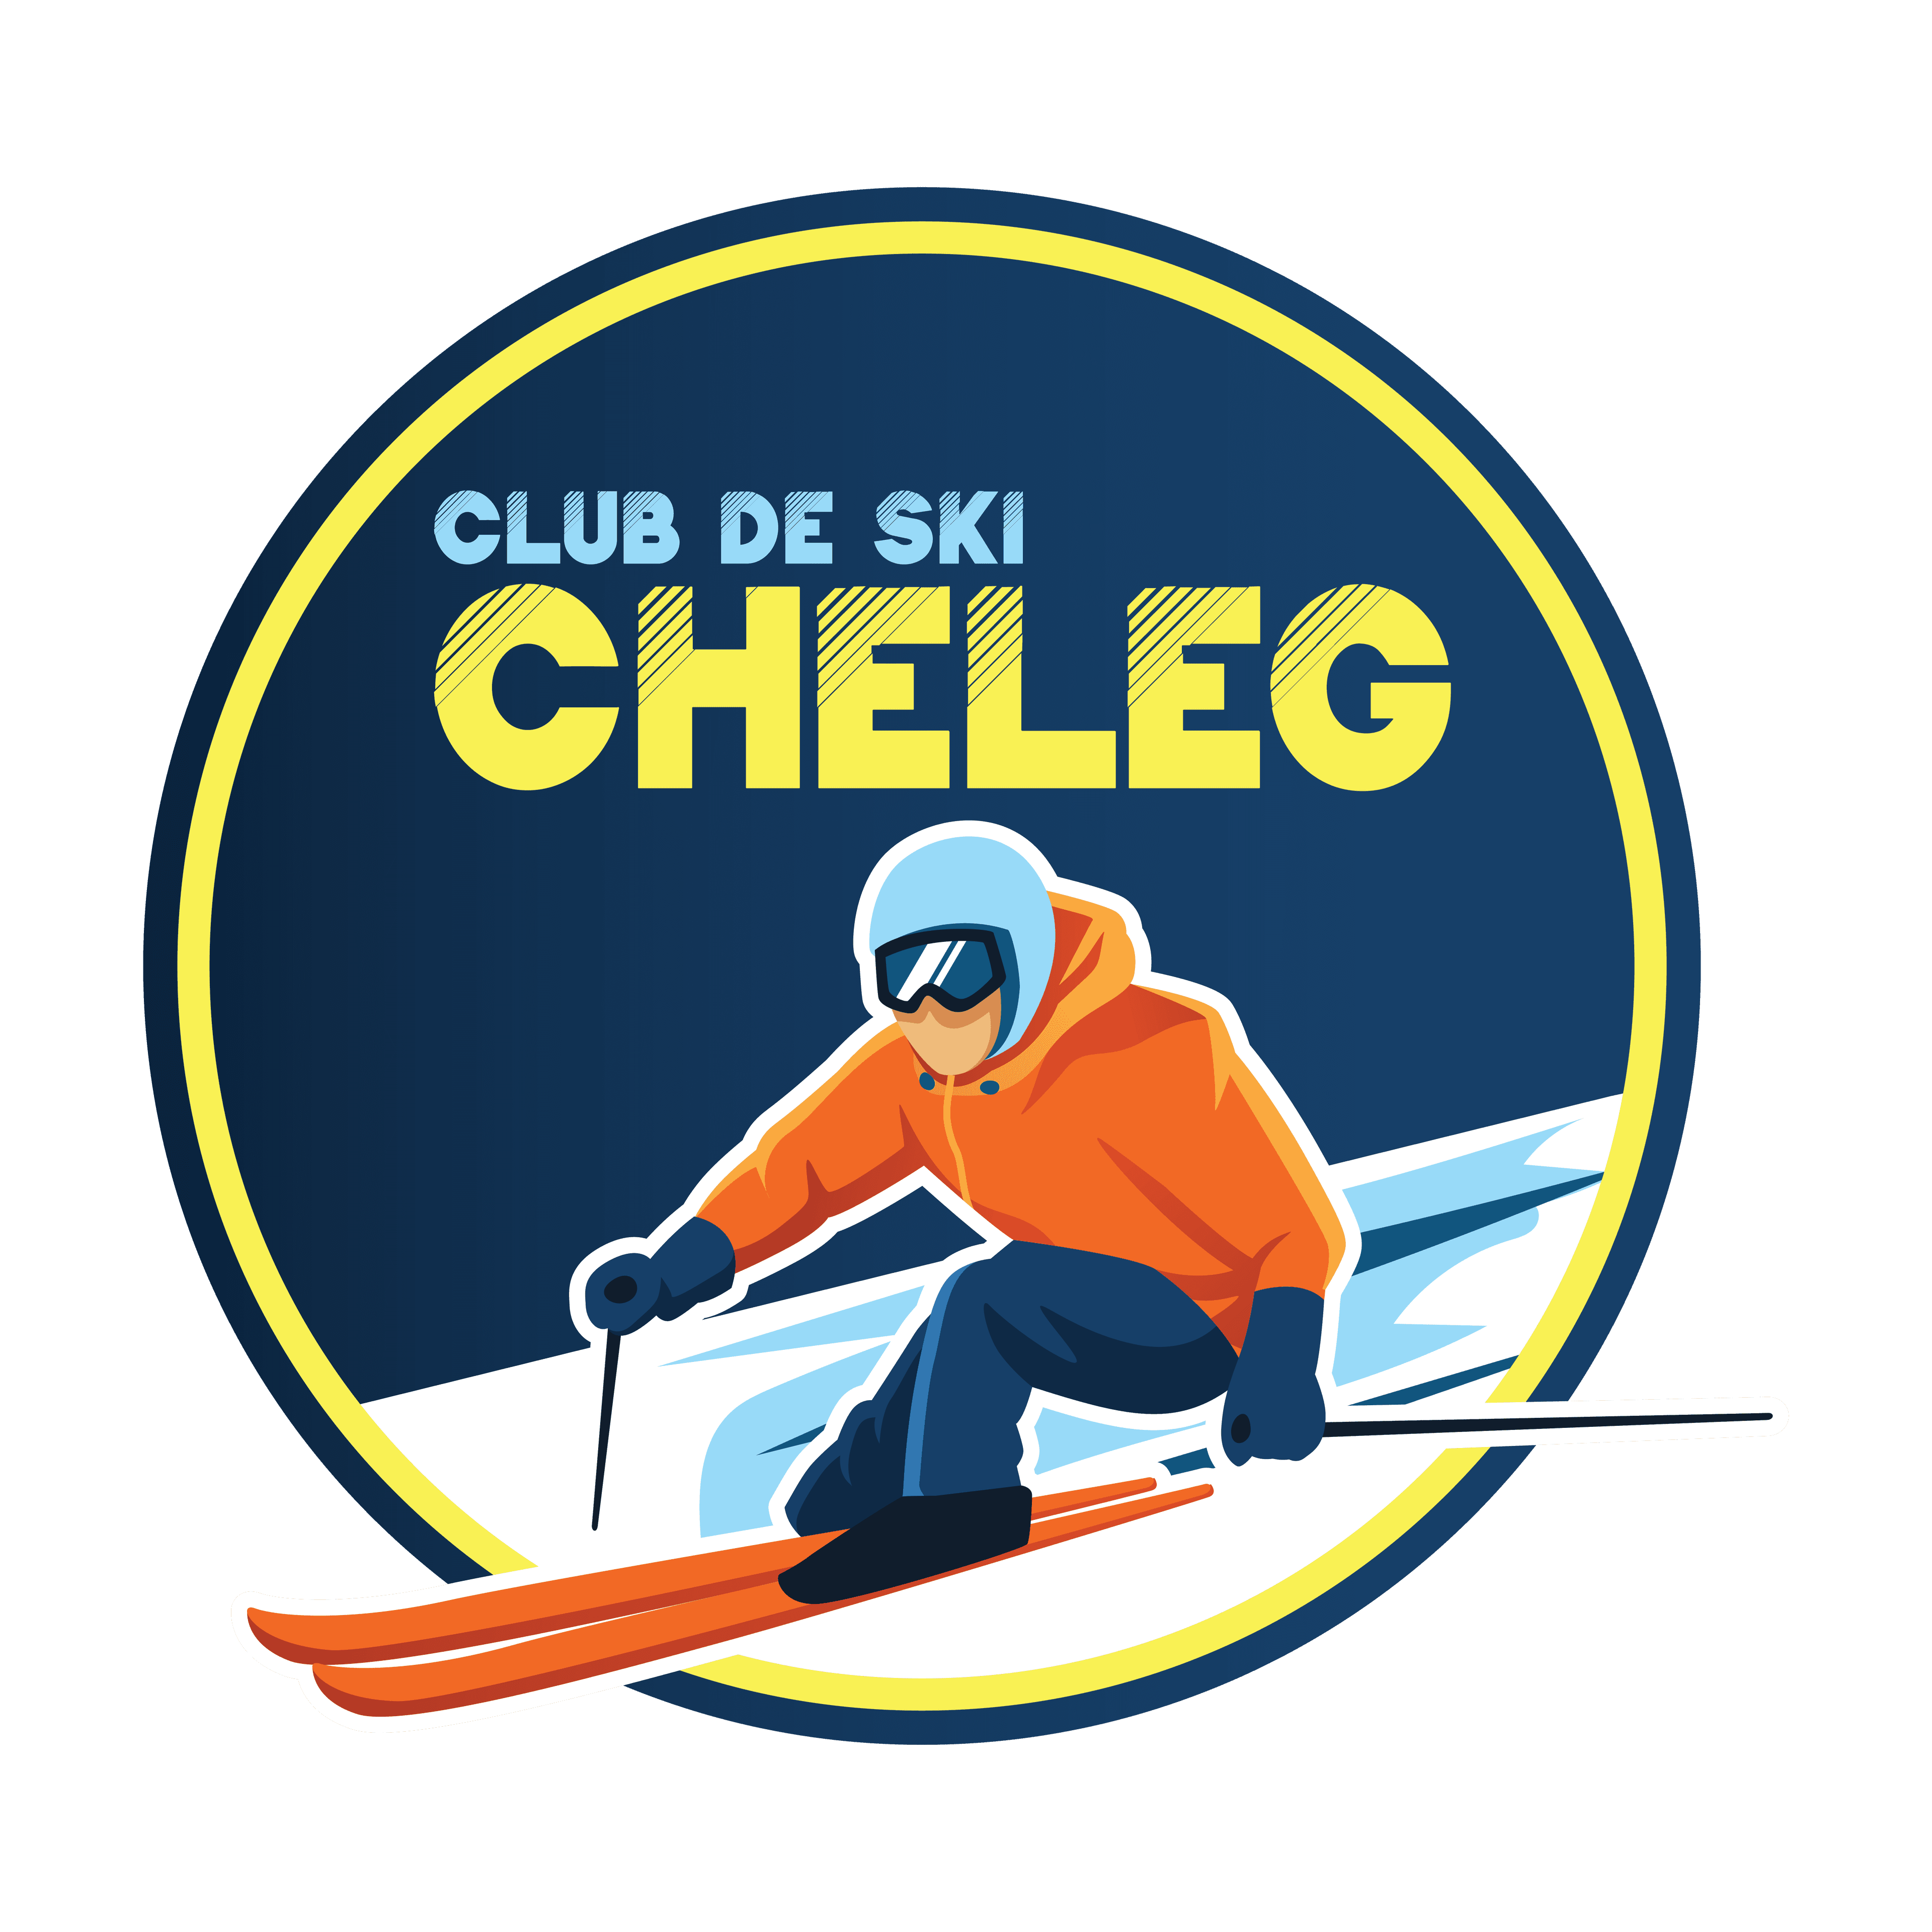 jeunesse_club cheleg_logo_2021-20230110-184012.png